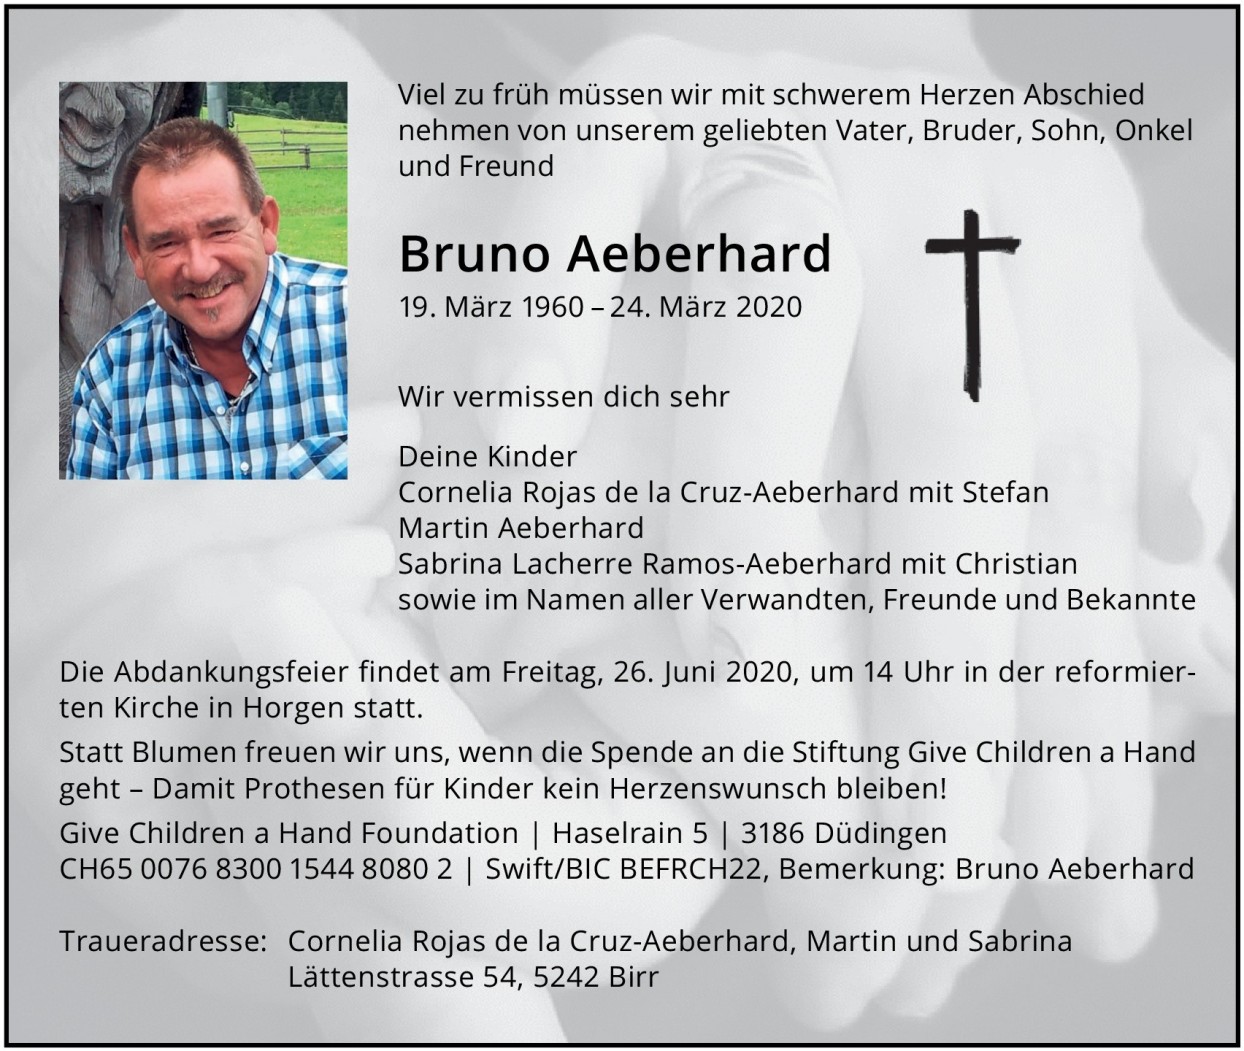 Bruno Aeberhard